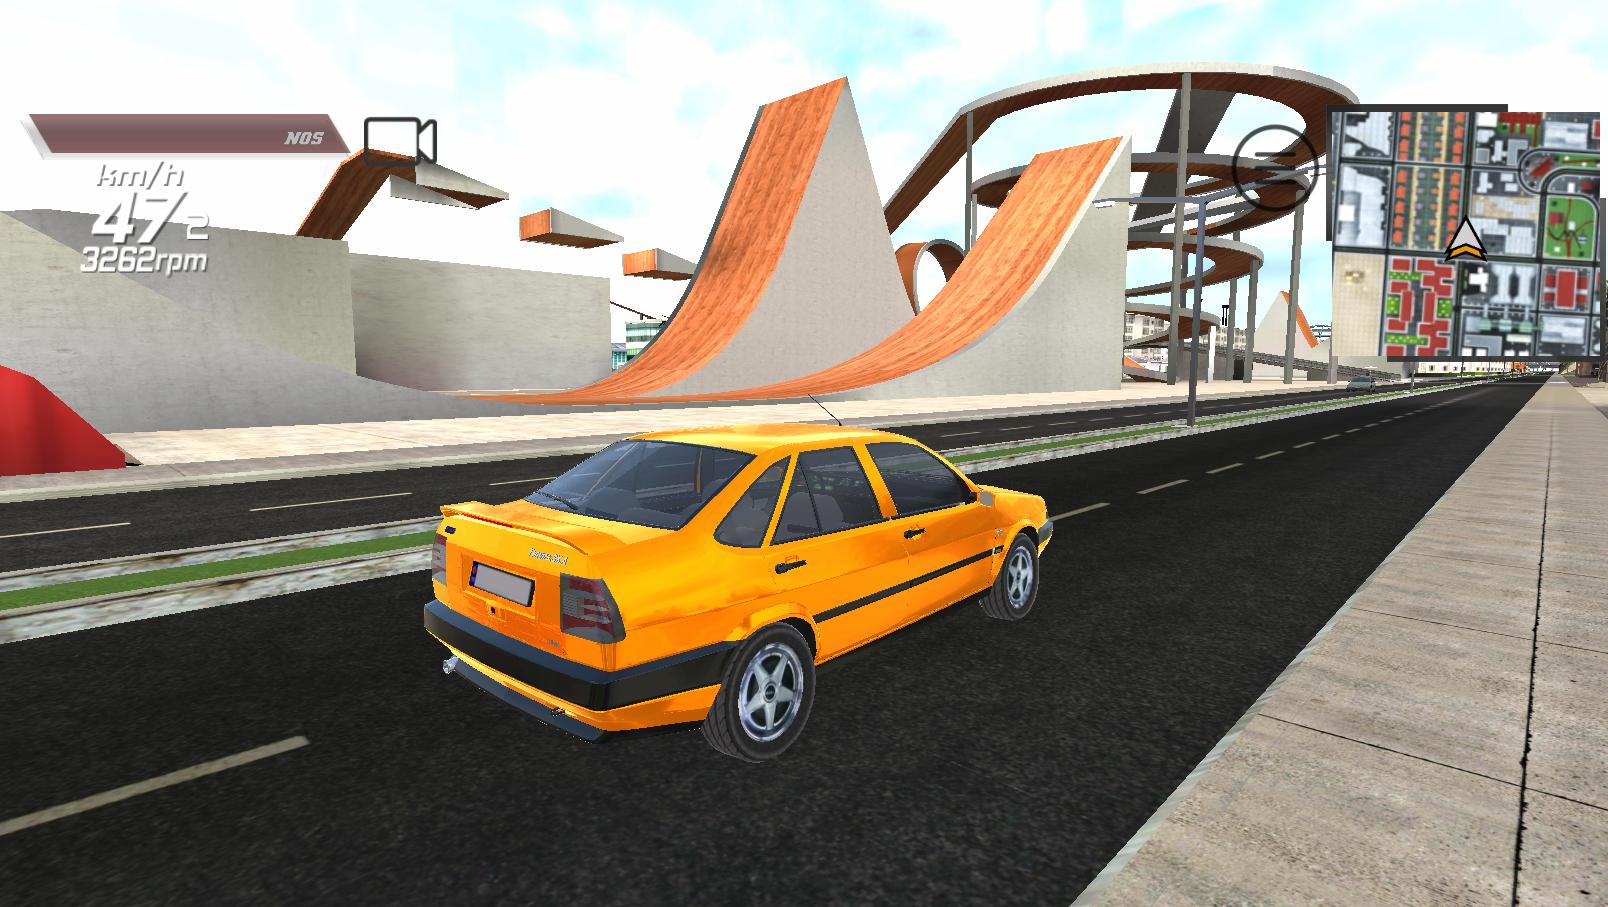 Tempra - City Simulation, Quests and Parking 1.7 Screenshot 9